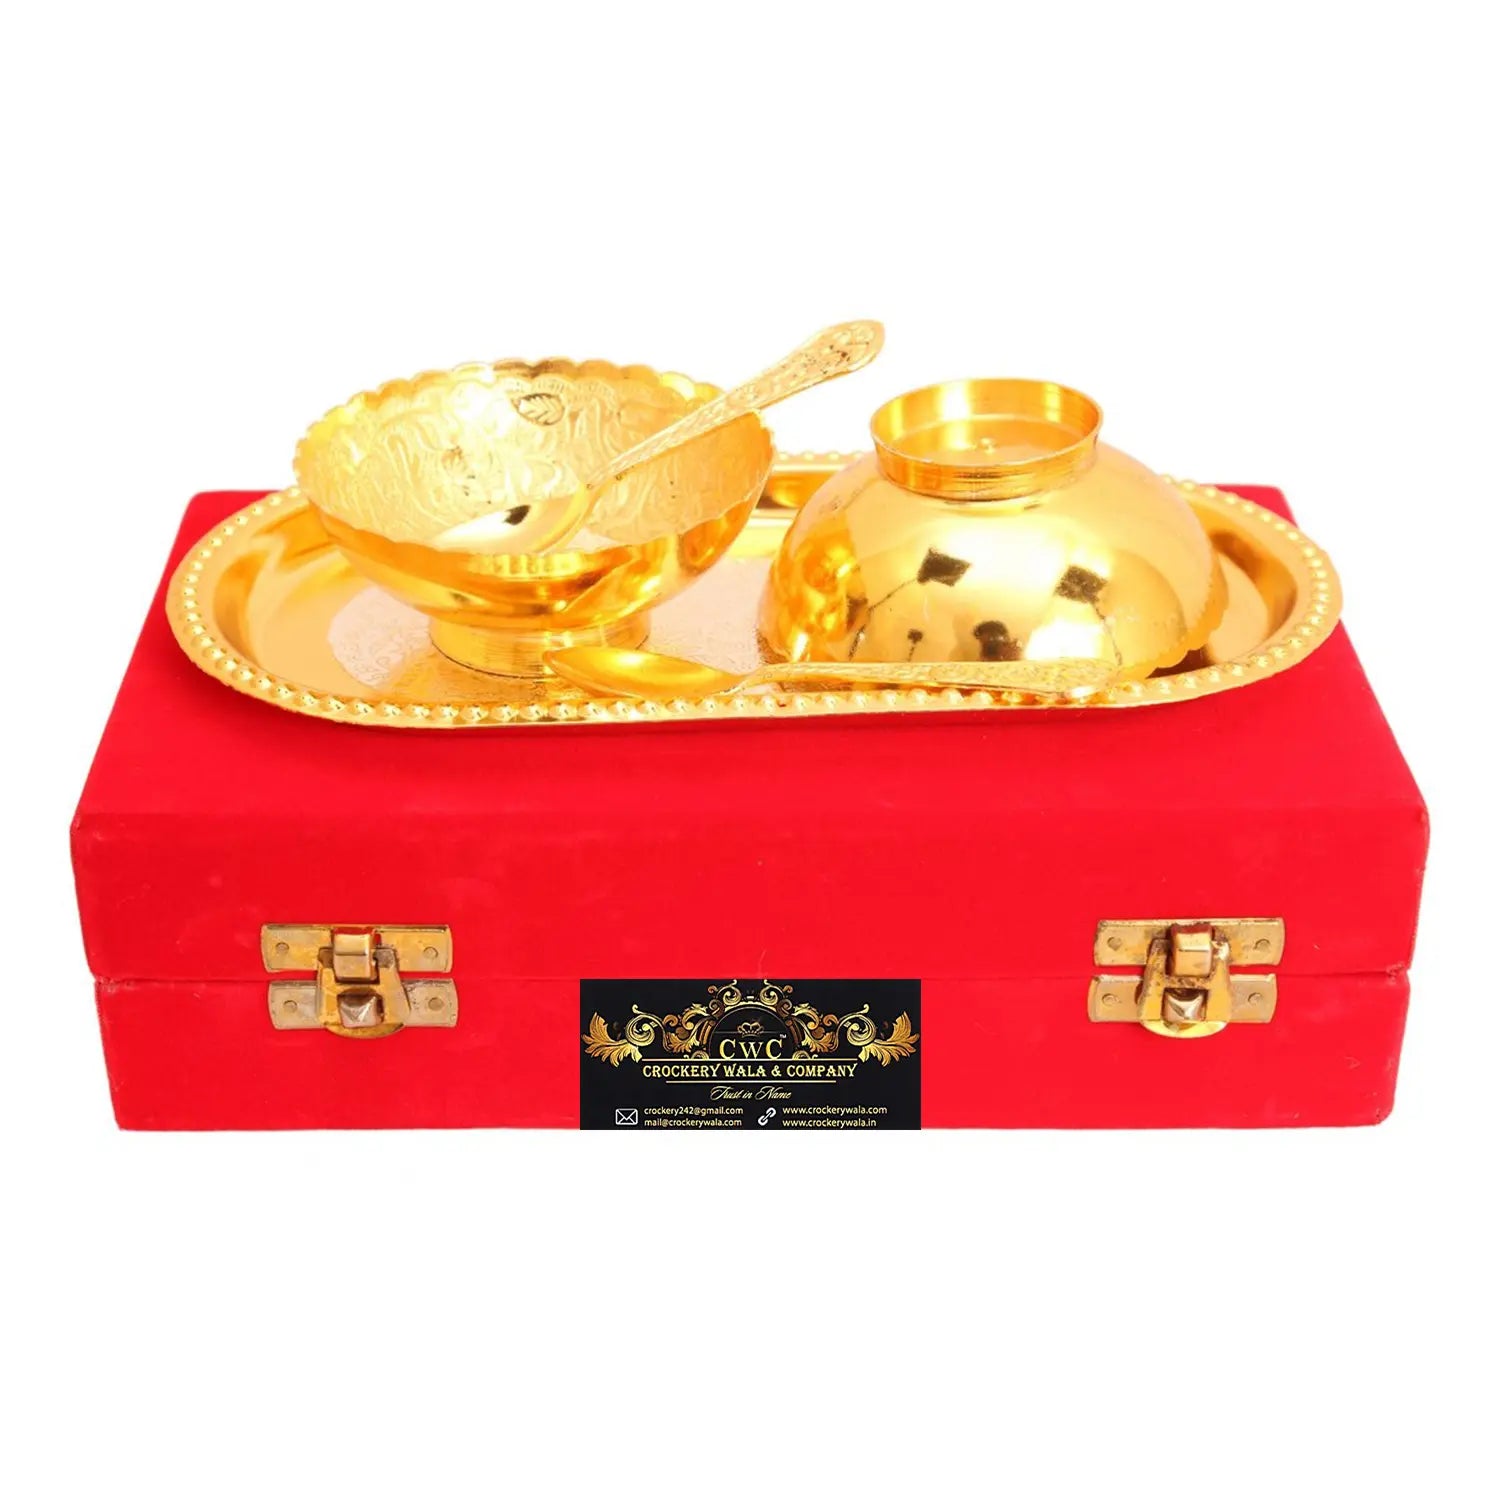 Crockery Wala & Company Silver Plated Gold Polished Bowl Set with 8 Spoons & 4 Tray, Set of 4, Diwali Gift Item - CROCKERY WALA AND COMPANY 